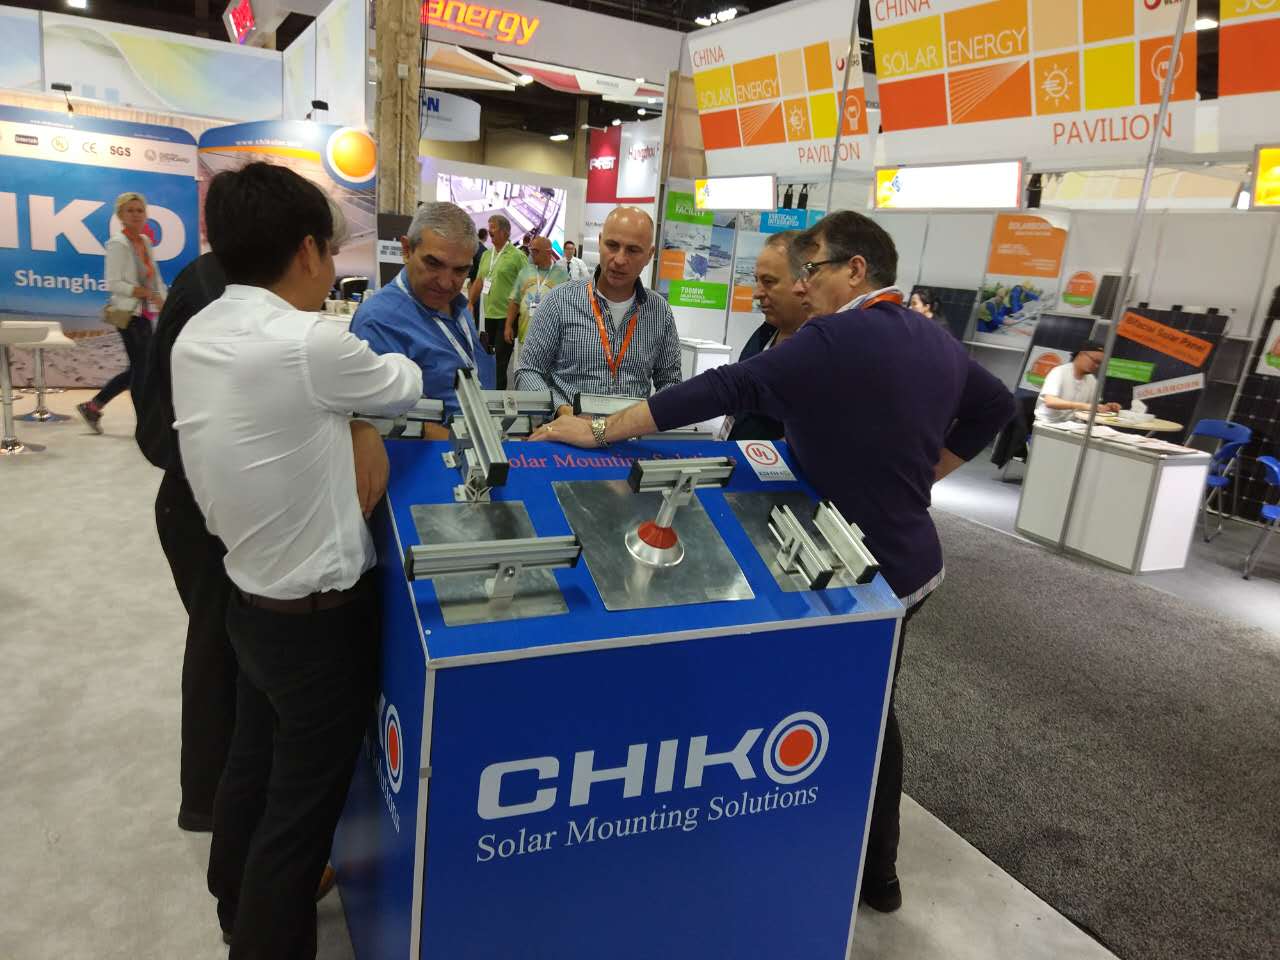 Chiko solar mounting exhibition